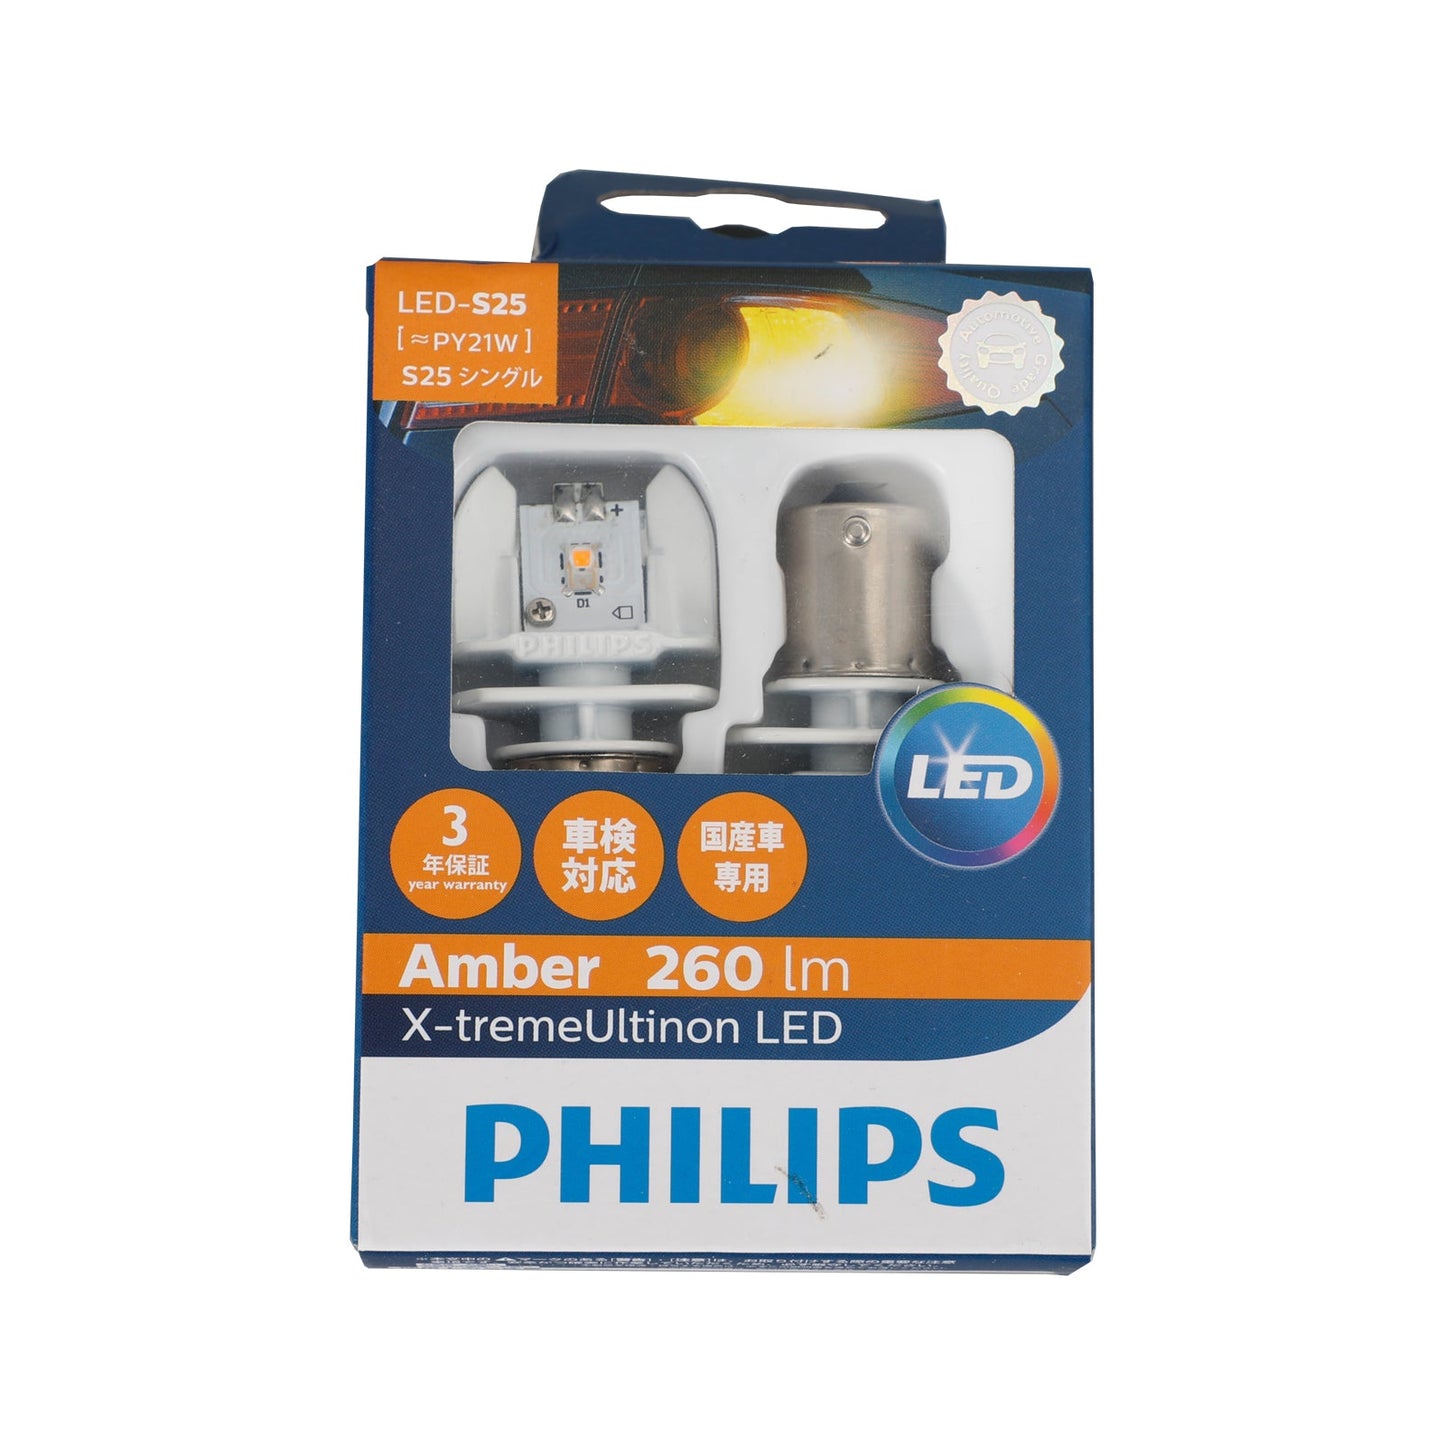 For Philips 12764X2 Car X-treme Ultinon LED PY21W 12V21W BAU15S 260LM Amber